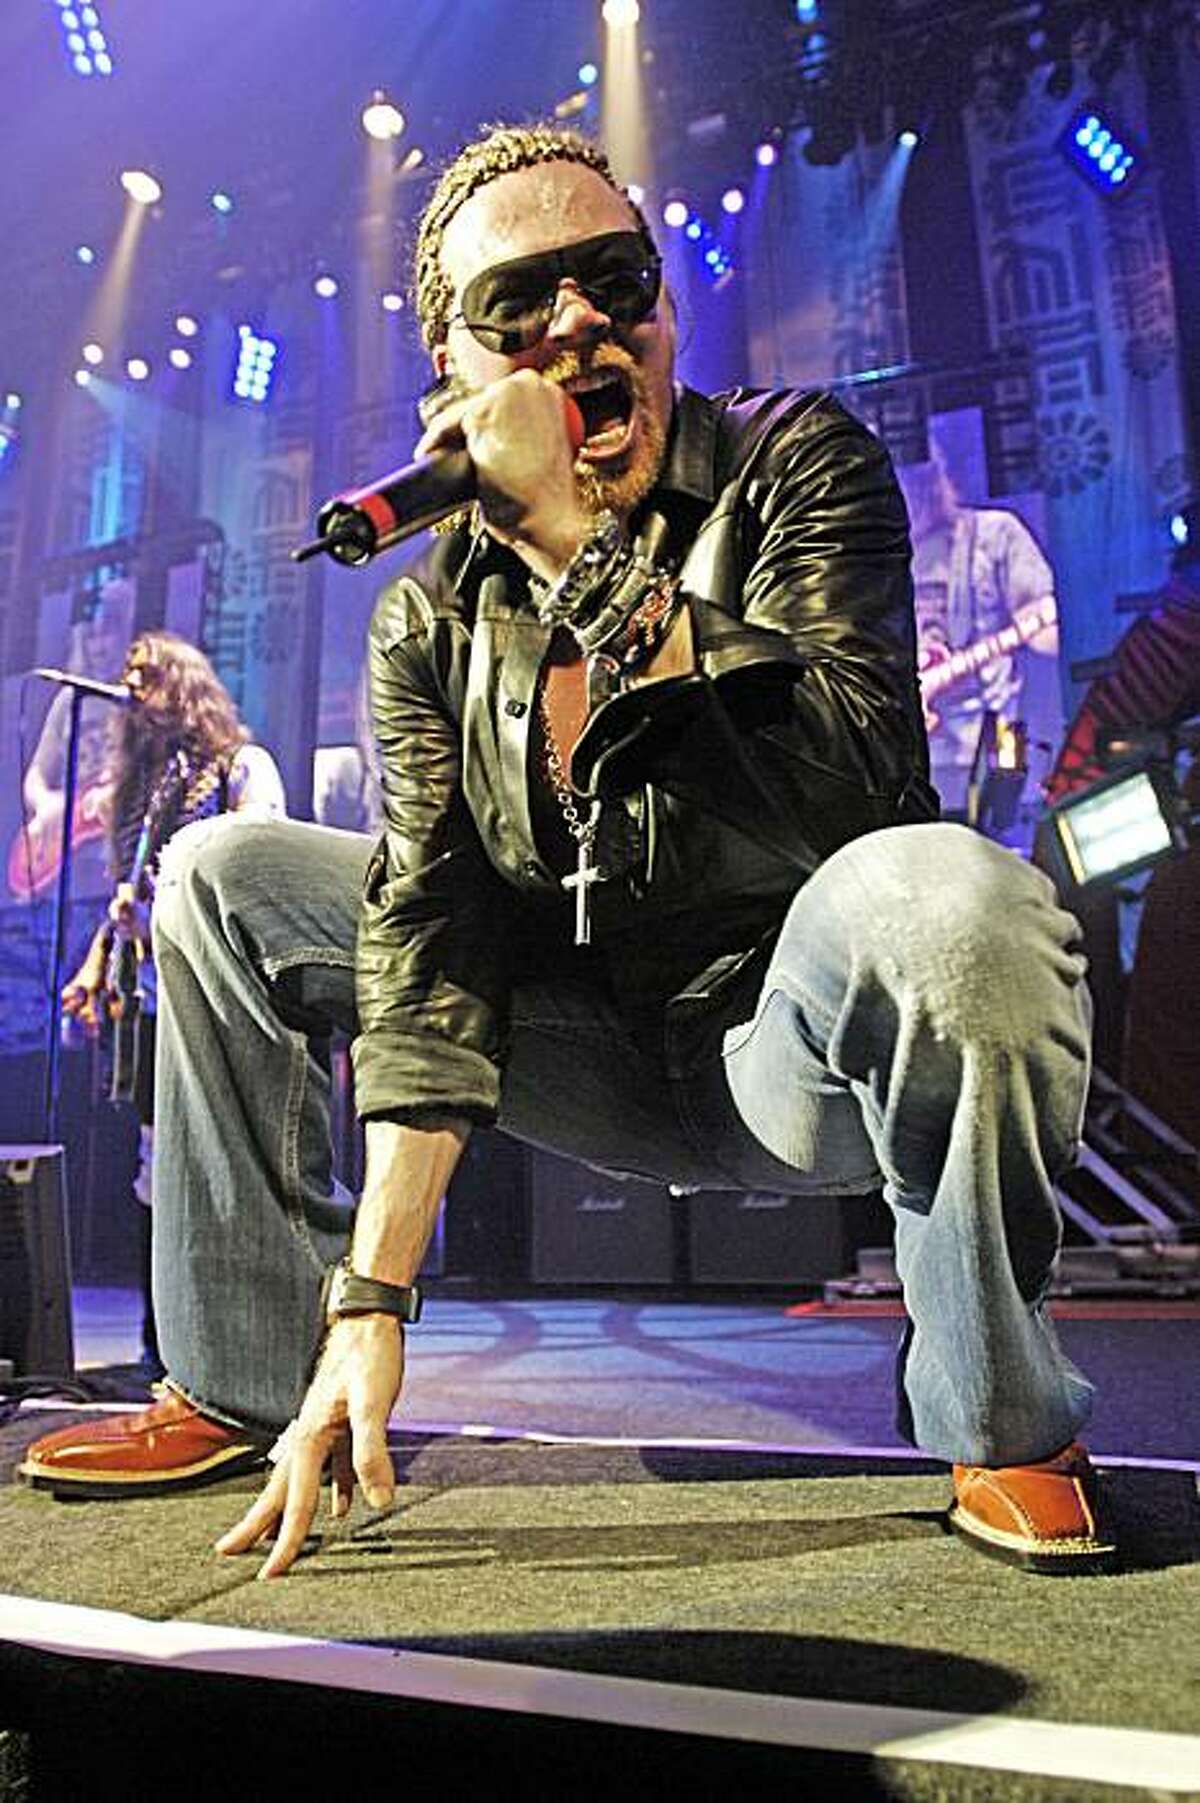 Axl Rose of Guns N' Roses at Hammerstein Ballroom, New York, in 2006.